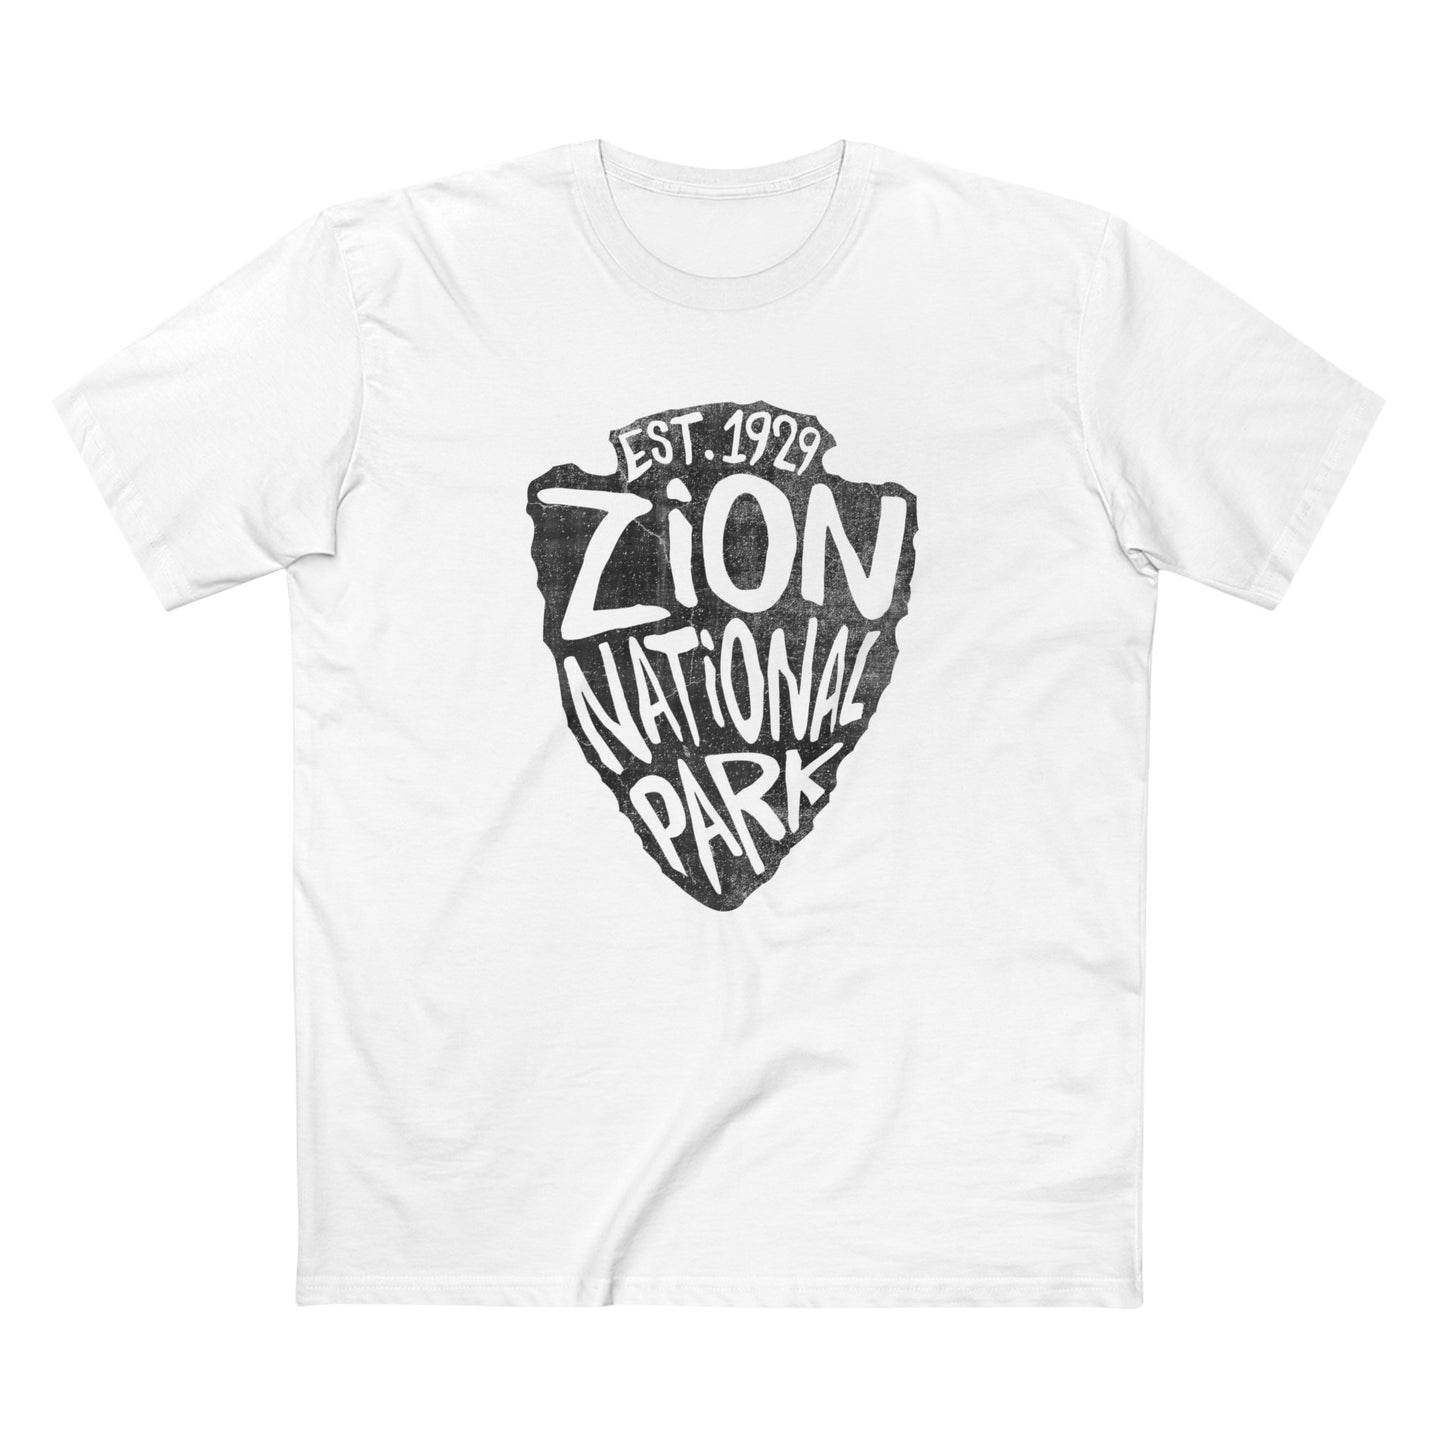 Zion National Park T-Shirt - Arrow Head Design